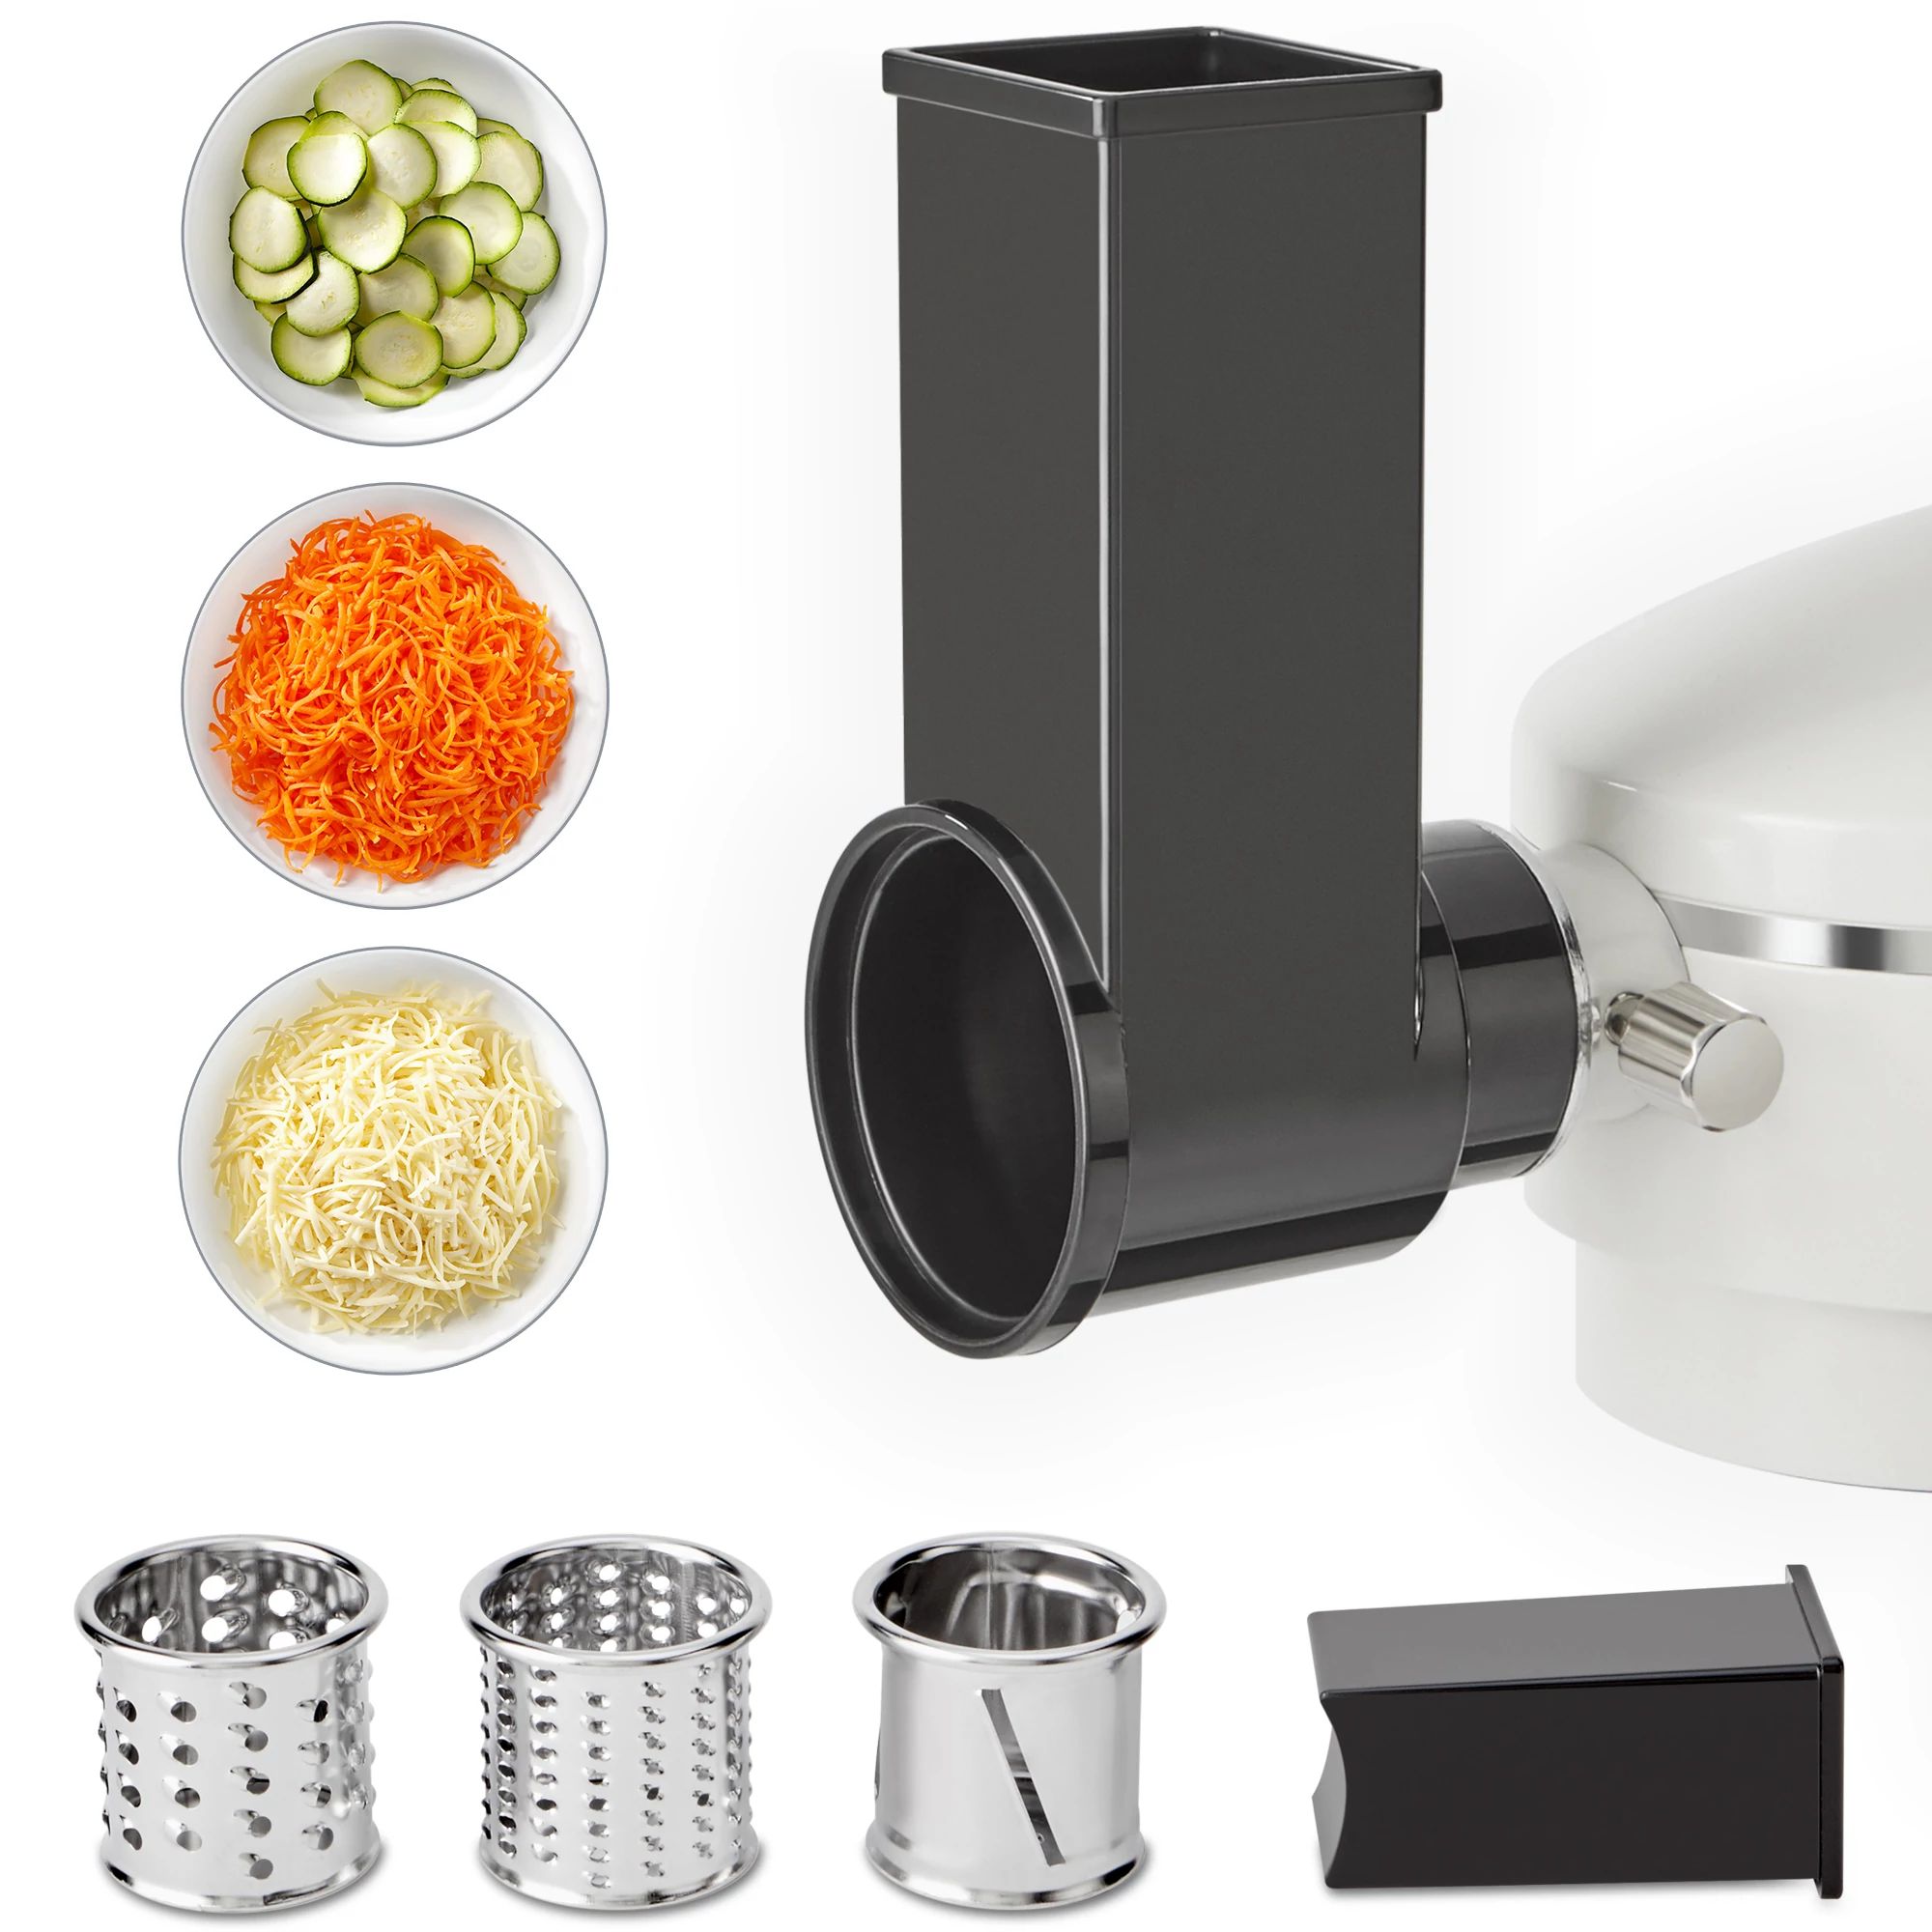 Slicer/Shredder Attachment for KitchenAid Stand Mixers as Vegetable Chopper  Accessory-Salad Maker Kitchen Meat Grinder